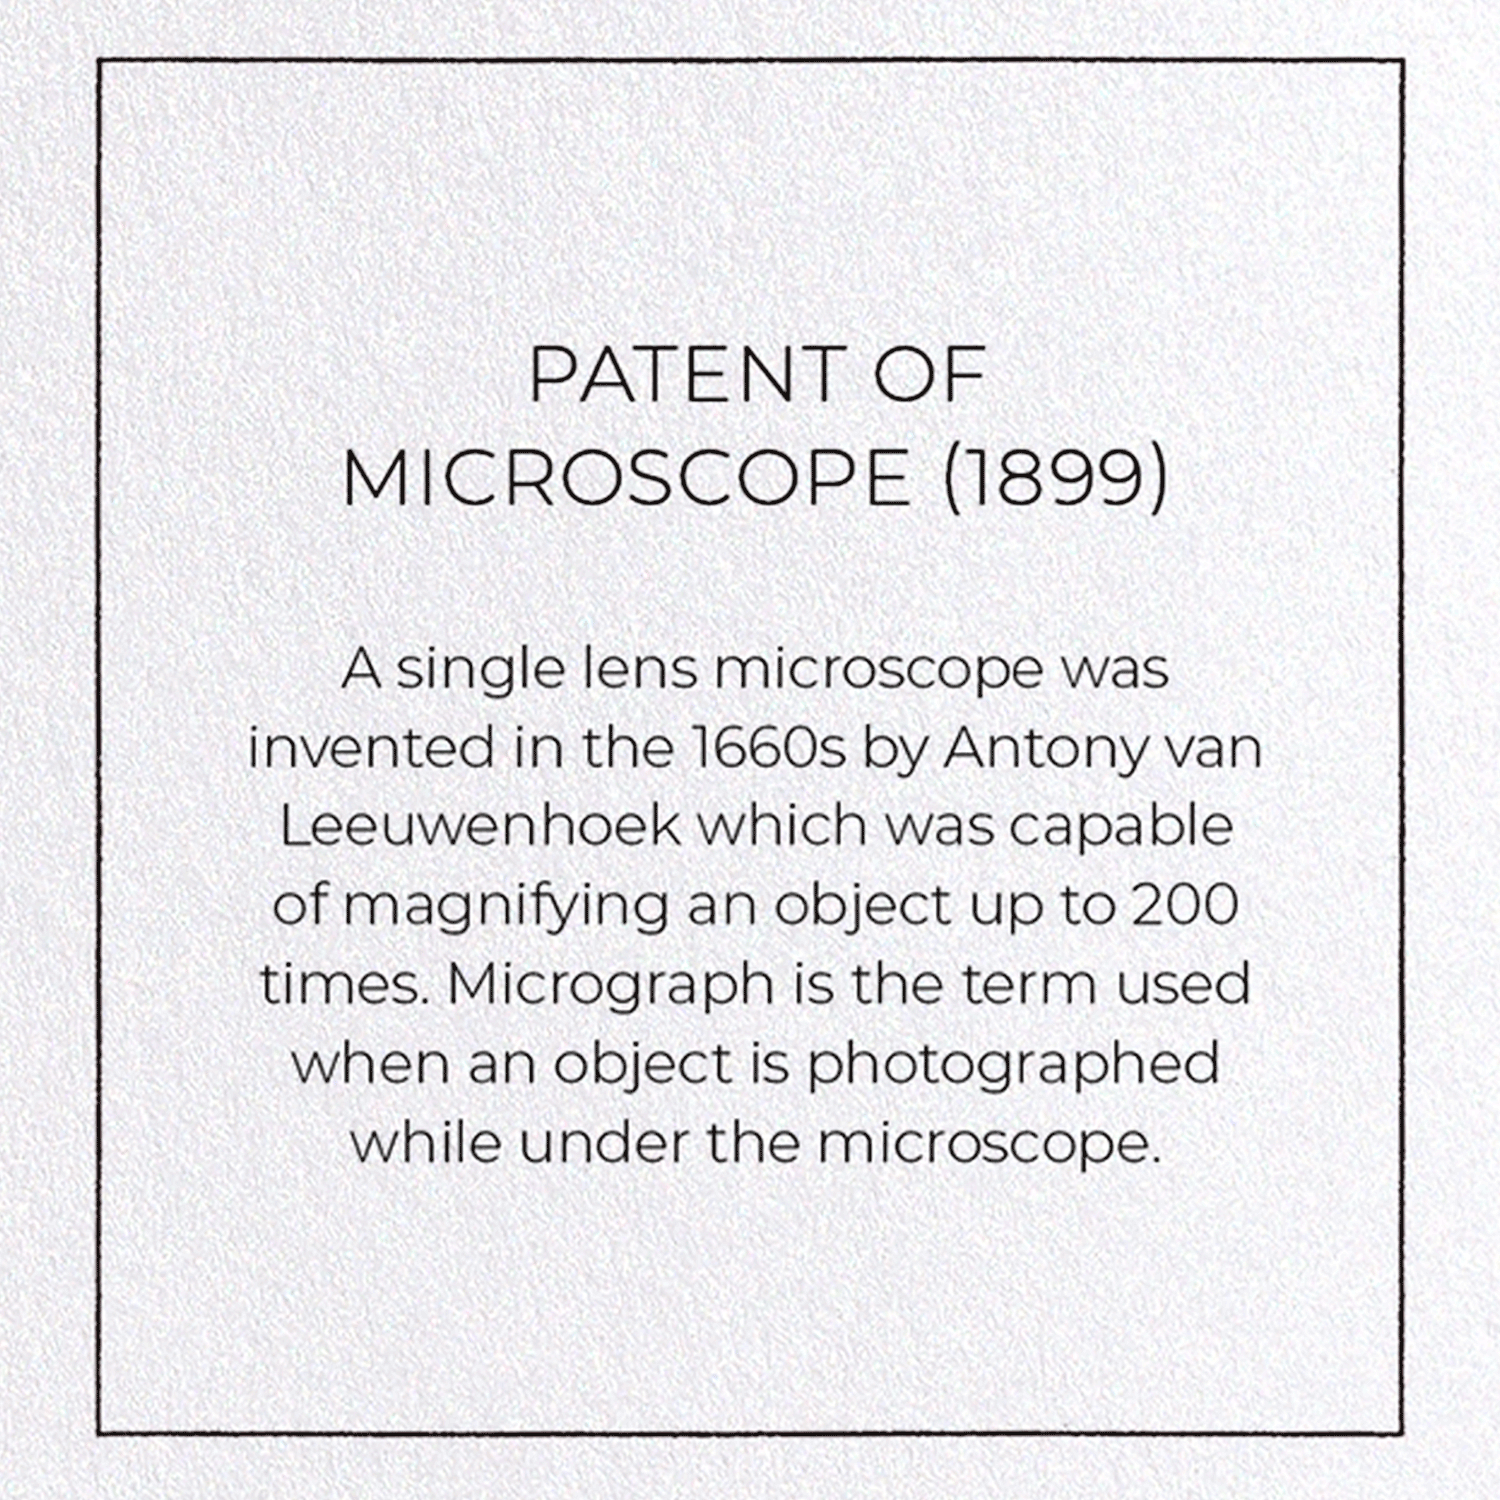 PATENT OF MICROSCOPE (1899)